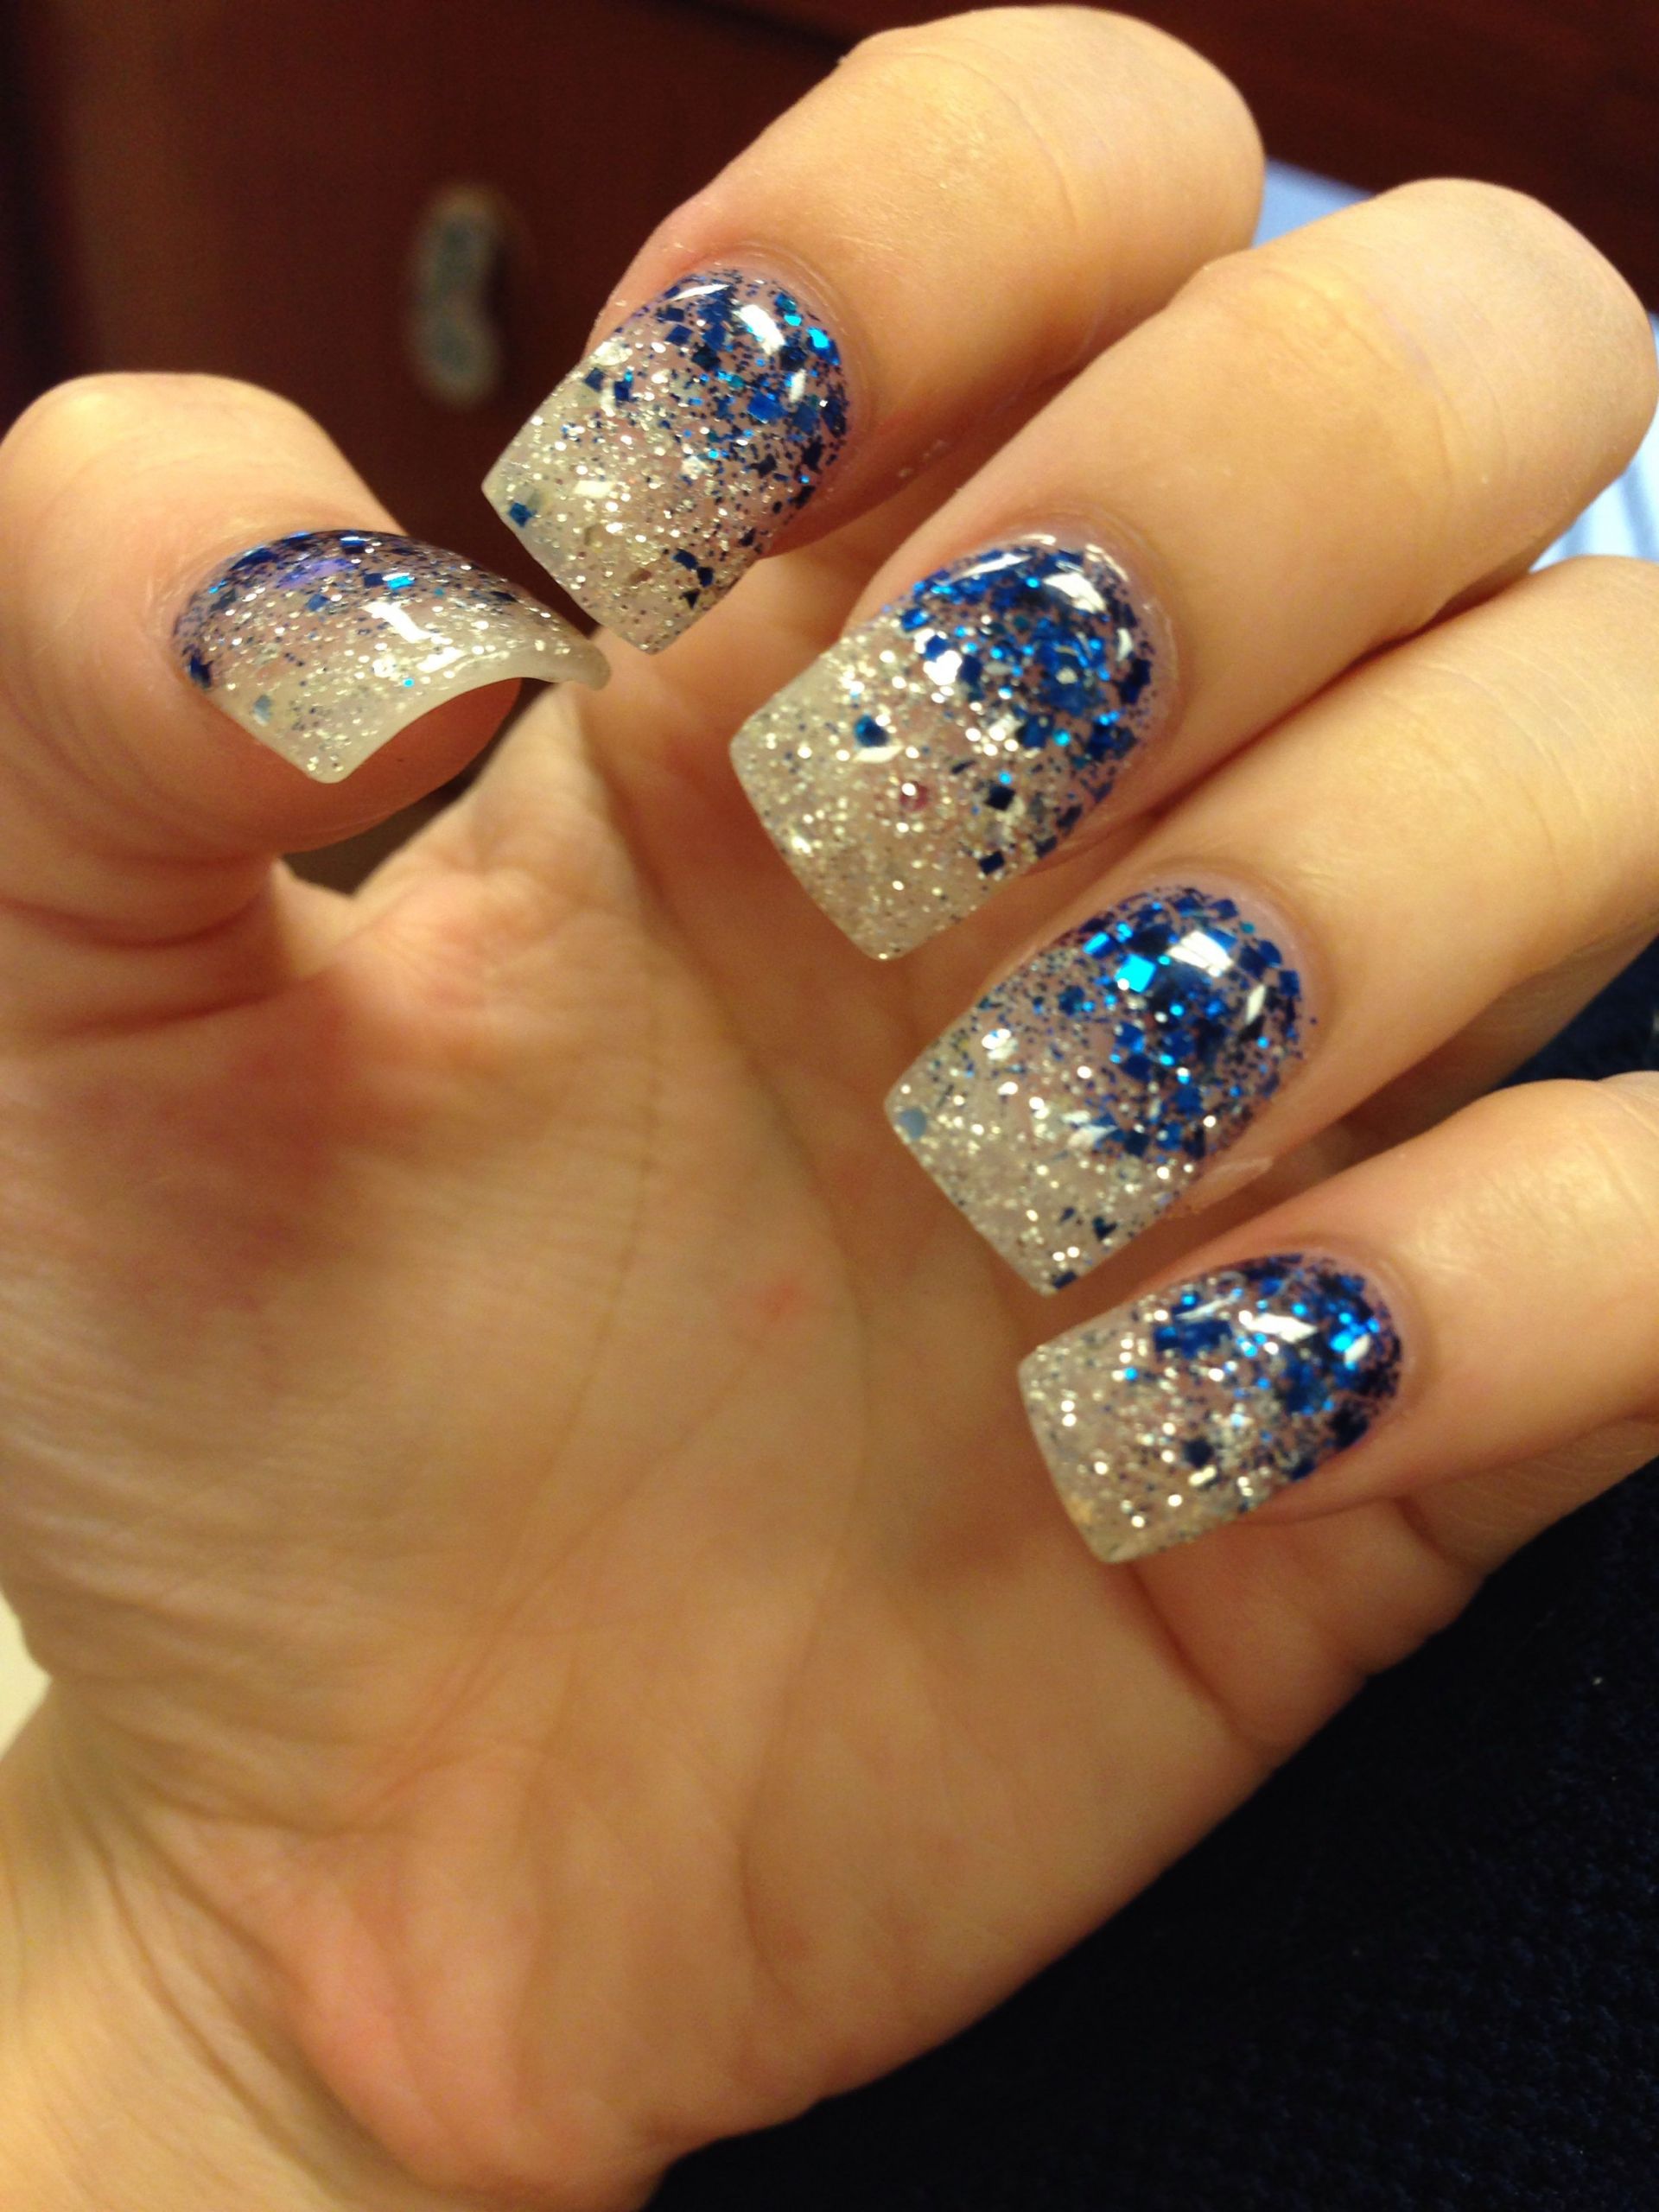 Blue Glitter Acrylic Nails
 My Blue glitter faded acrylic nails